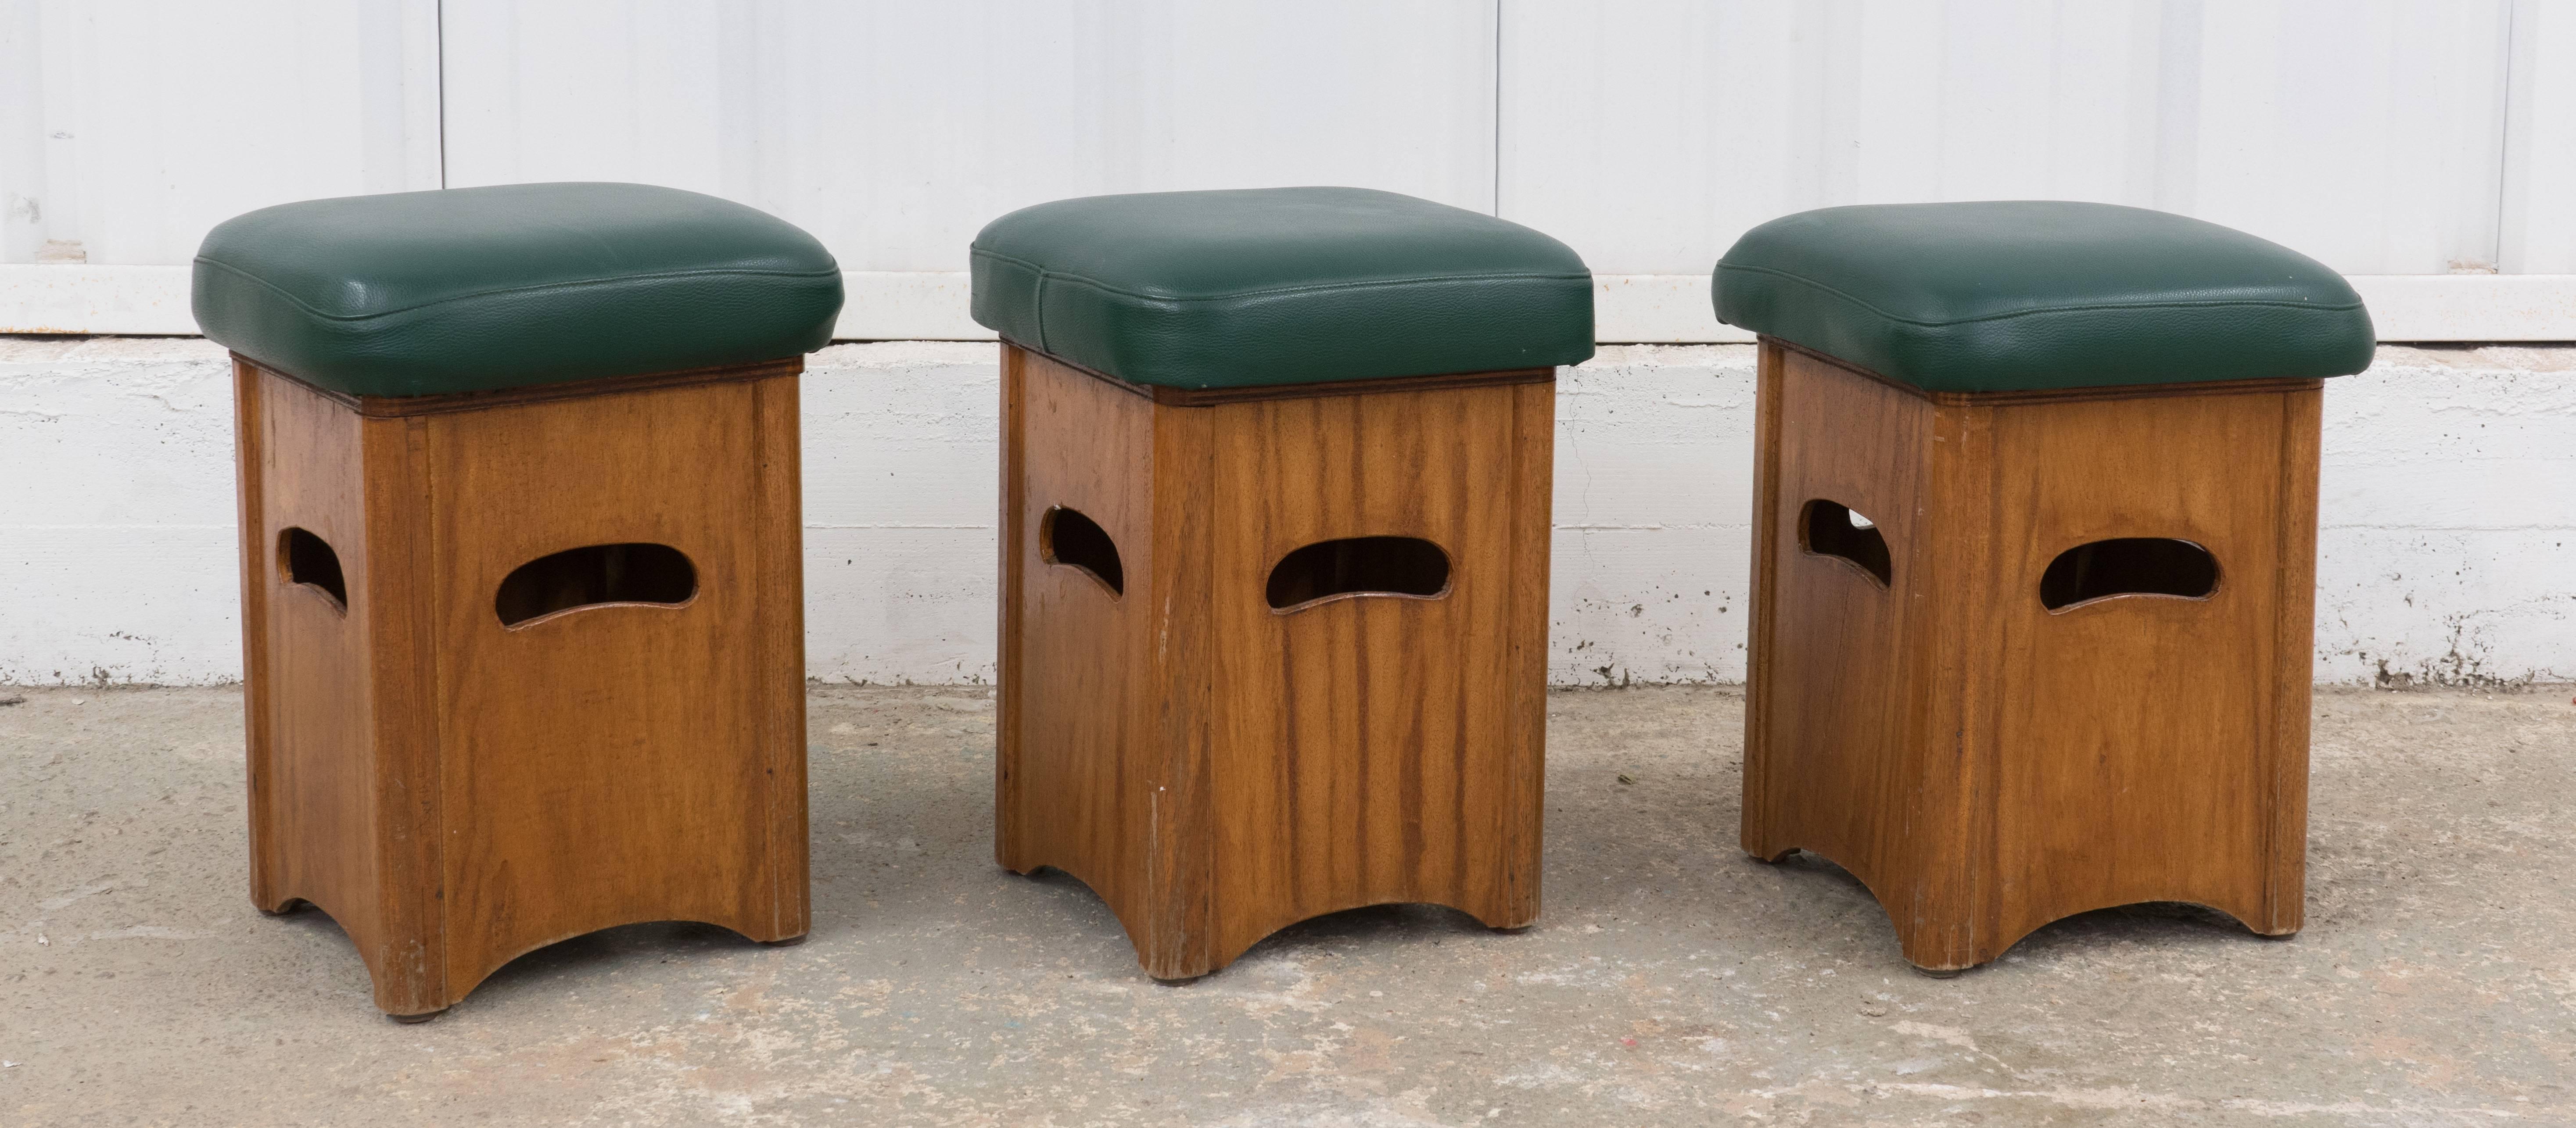 Set of three yacht stools with original green vinyl upholstery.